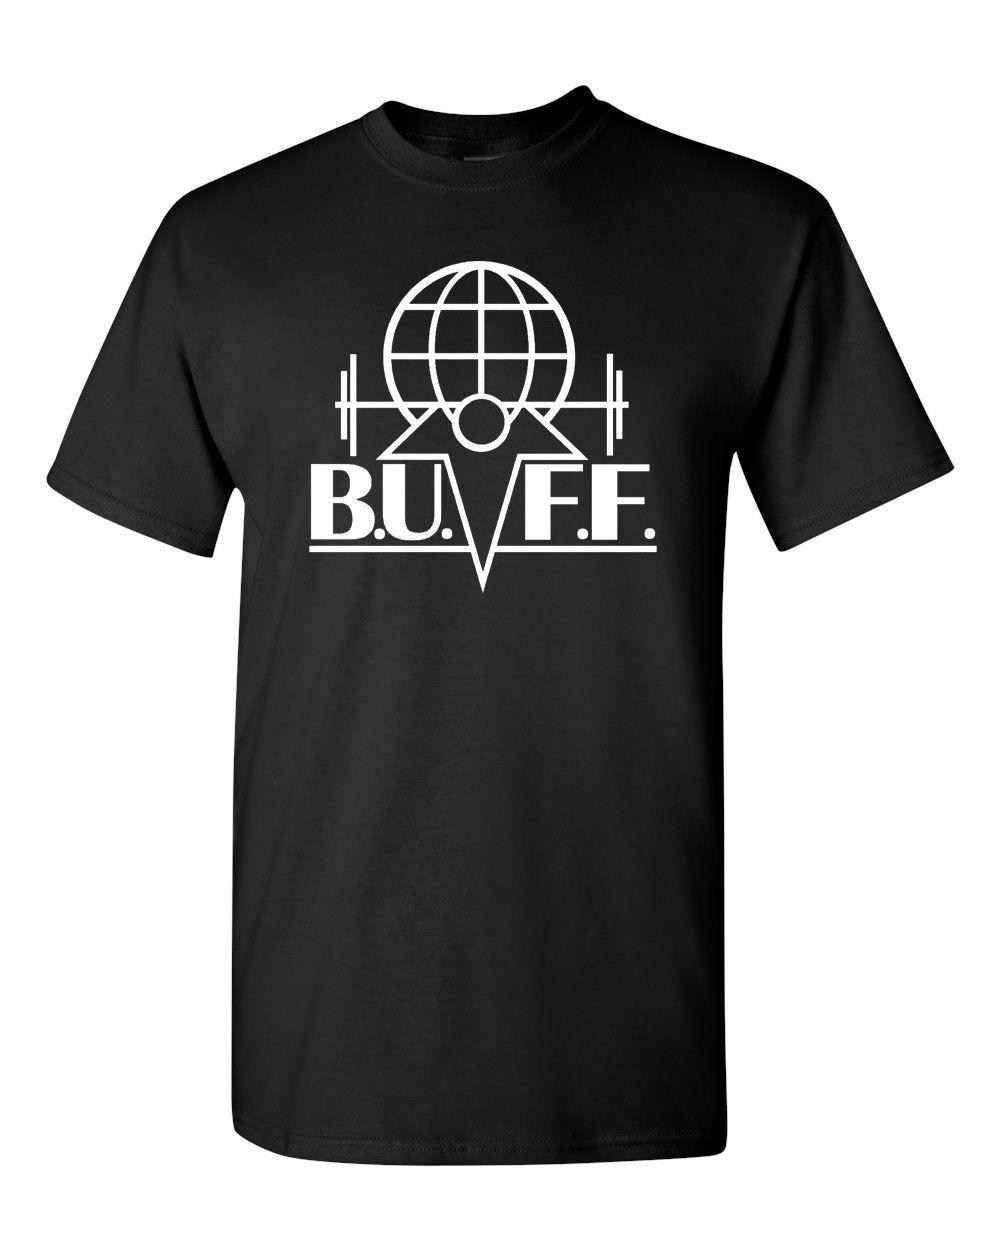 Buff Logo - B.U.F.F. Logo Adult Ring-spun Cotton Tee